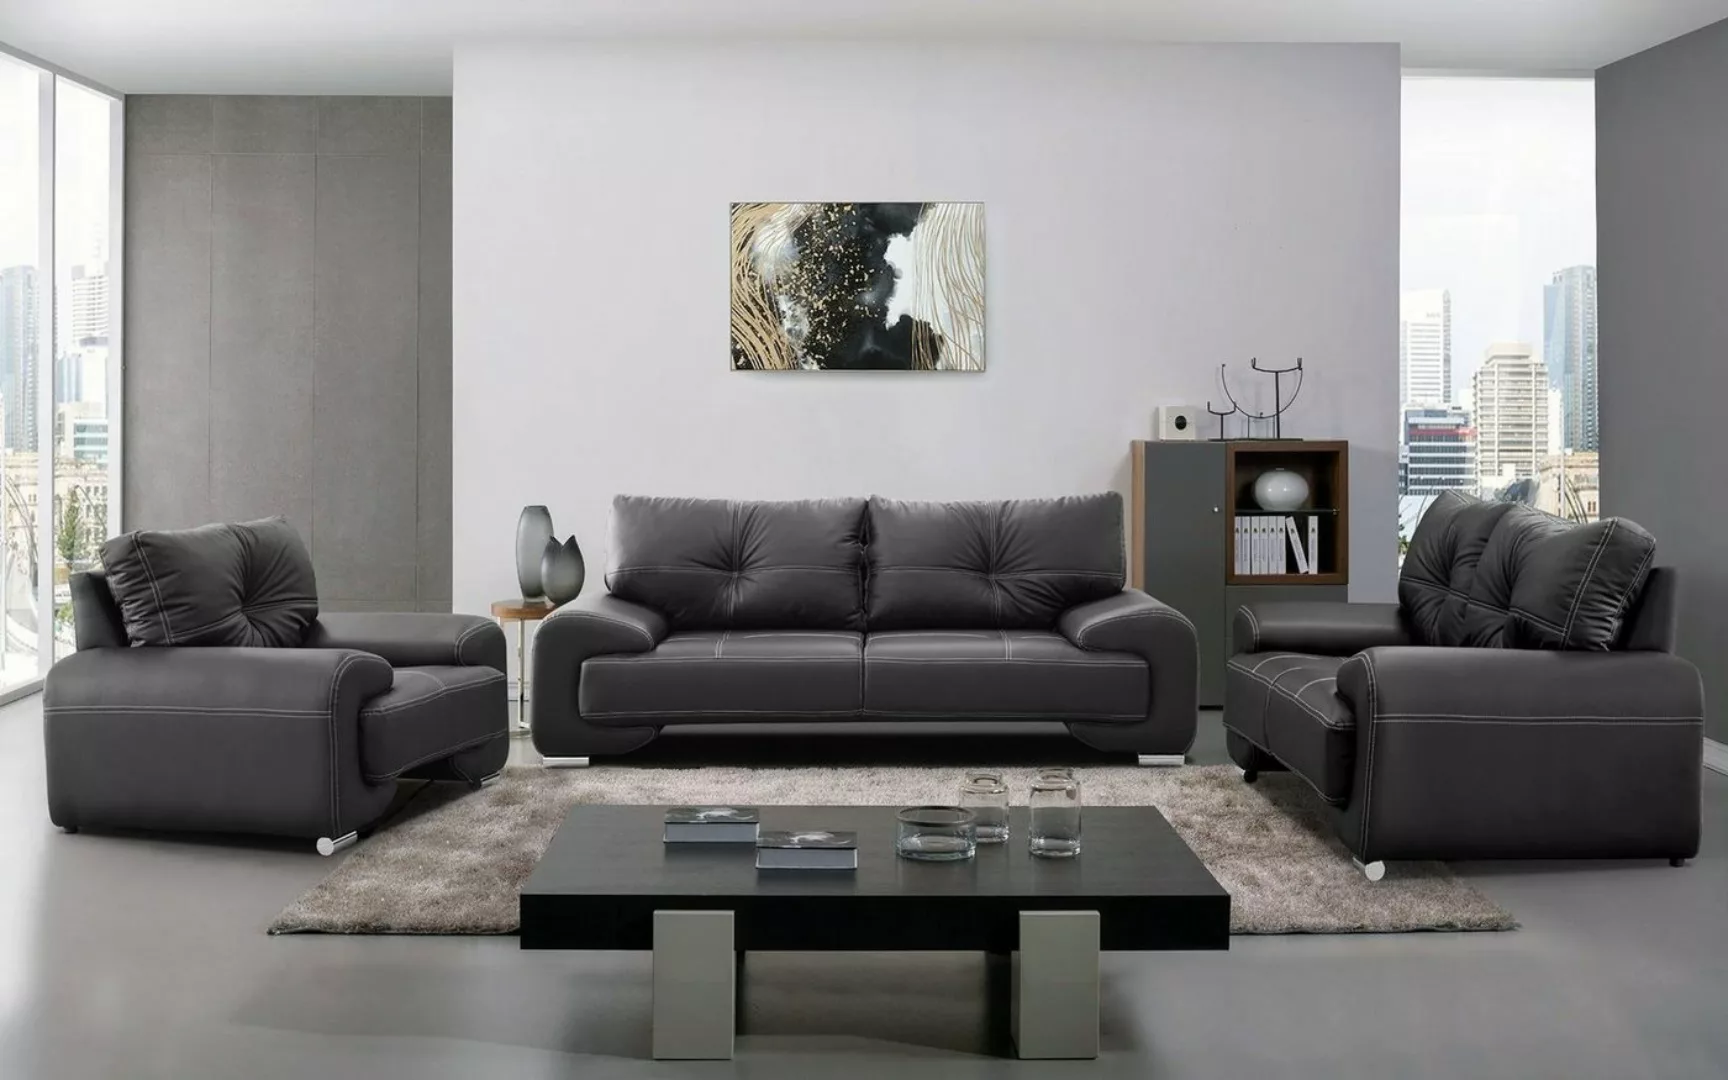 Beautysofa Big-Sofa Polstergarnitur Omega Set 3+2+1 Sofa Wohnzimmer Sofagar günstig online kaufen